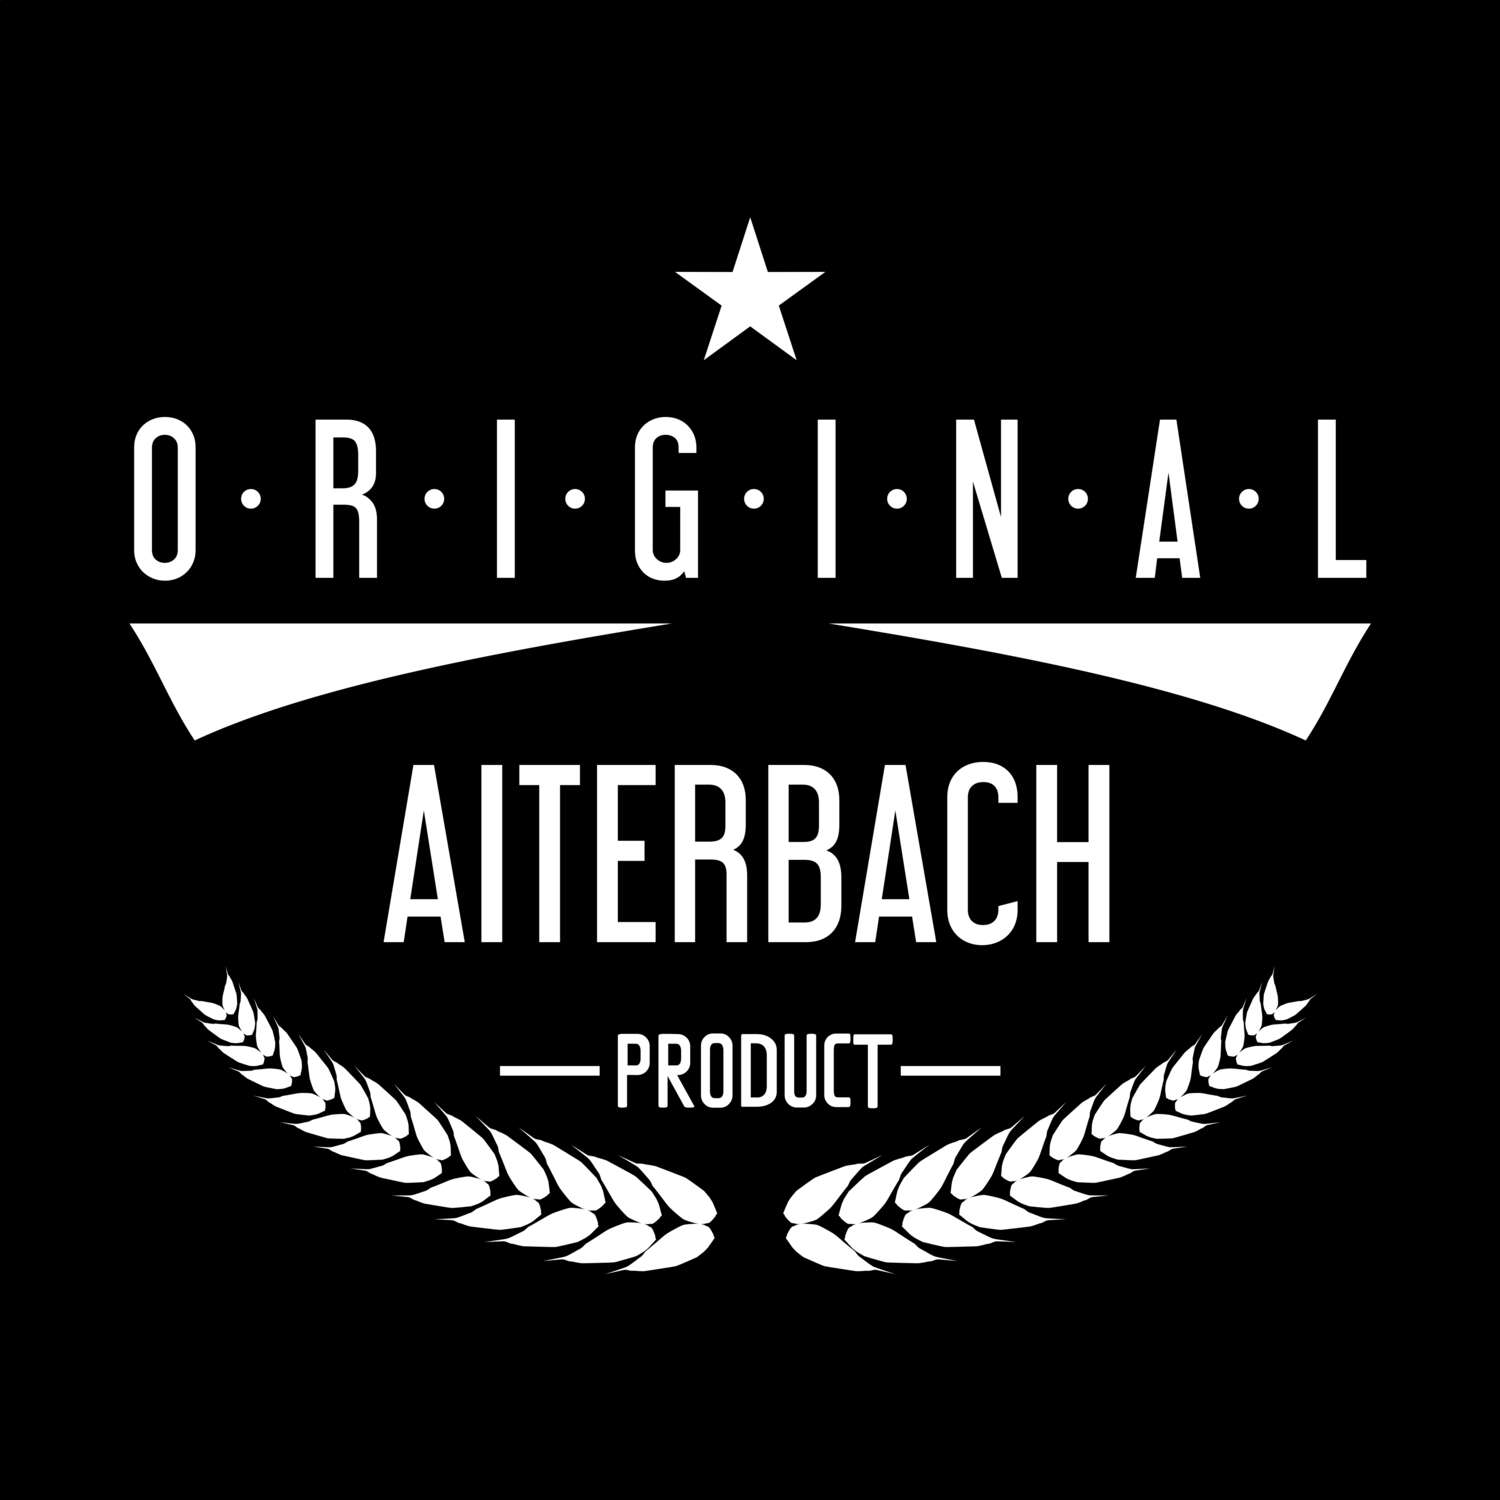 Aiterbach T-Shirt »Original Product«